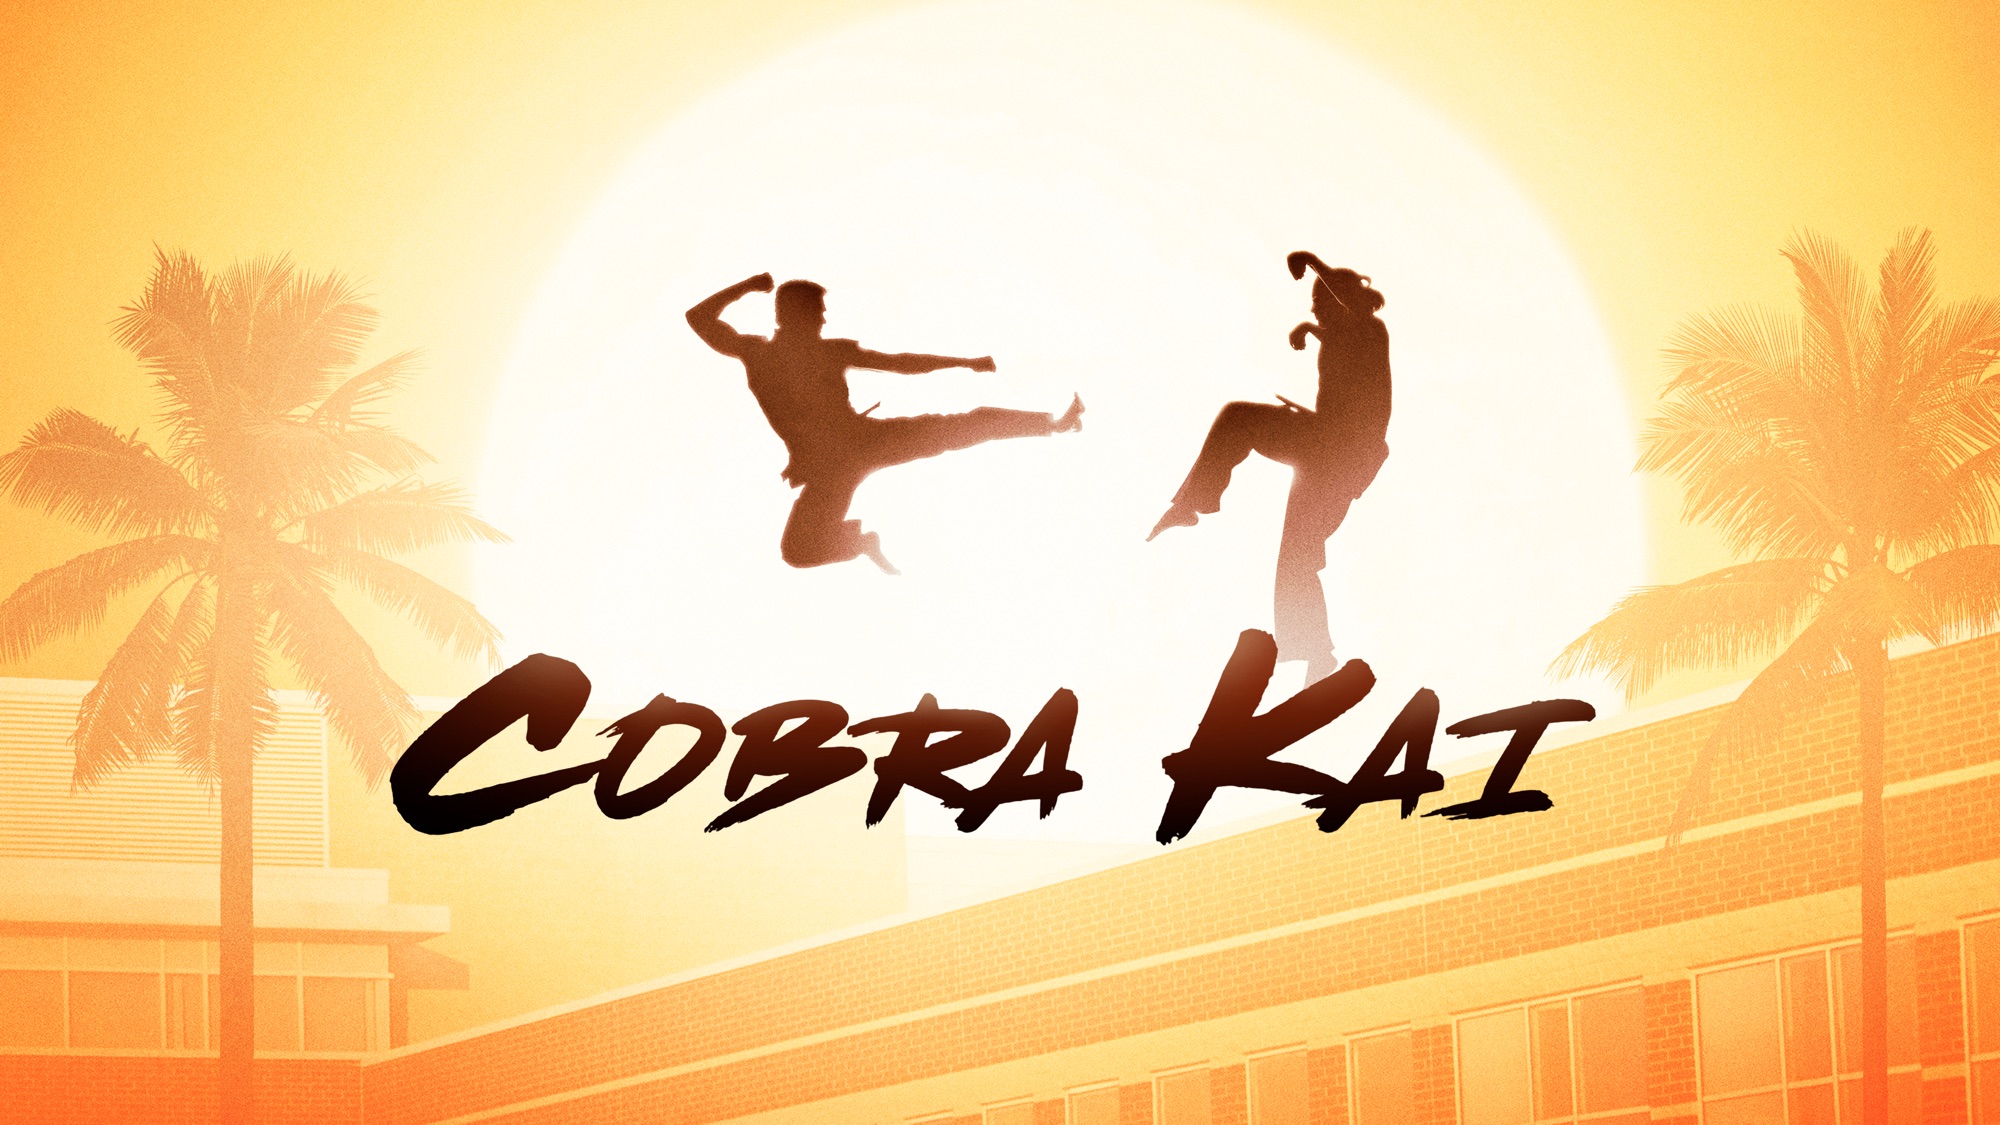 TV Show Cobra Kai HD Wallpaper Background Image.